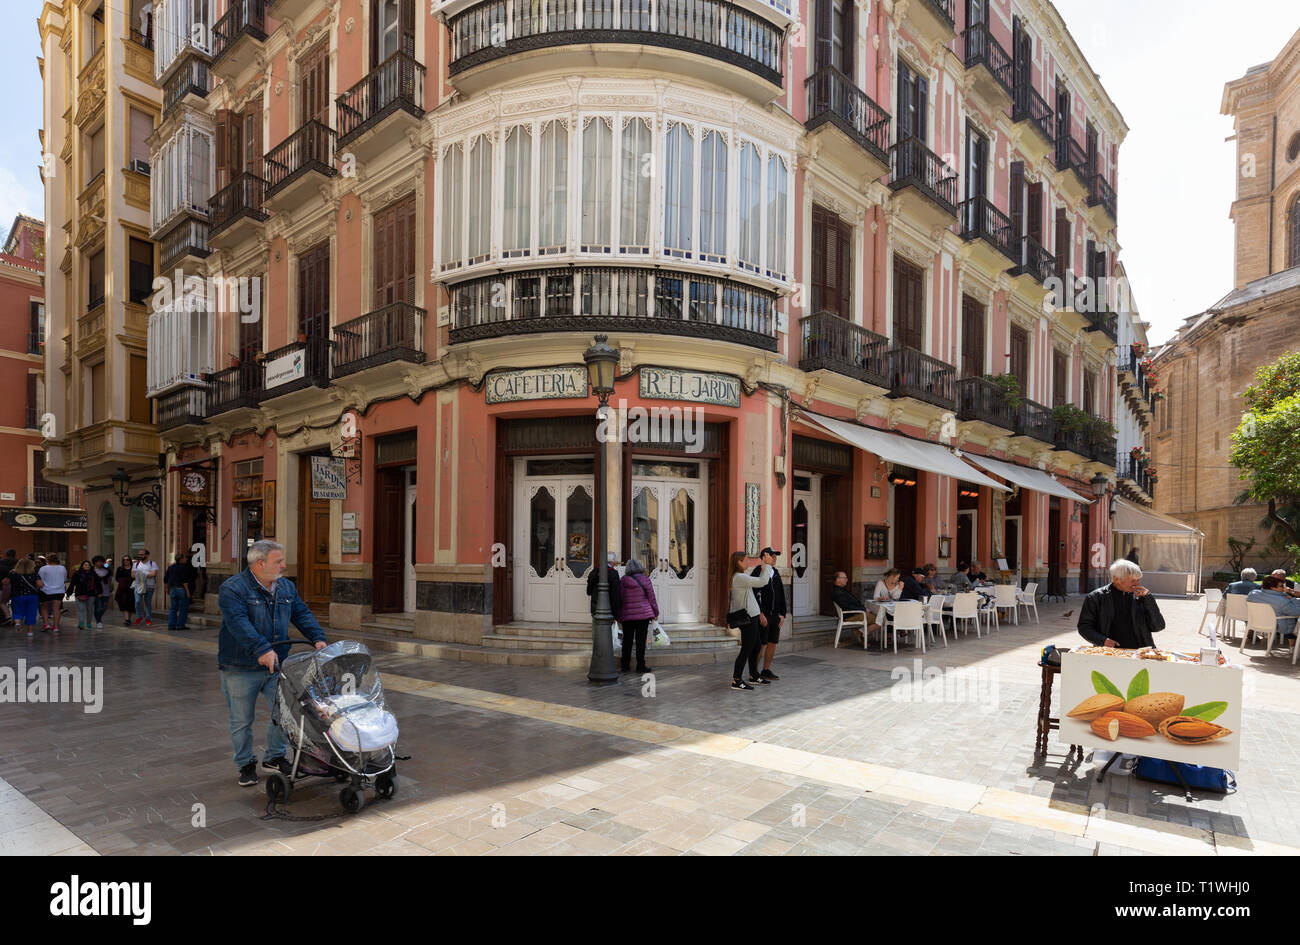 Spain lifestyle - Street scene, Malaga old town, Malaga Andalusia Spain Europe Stock Photo